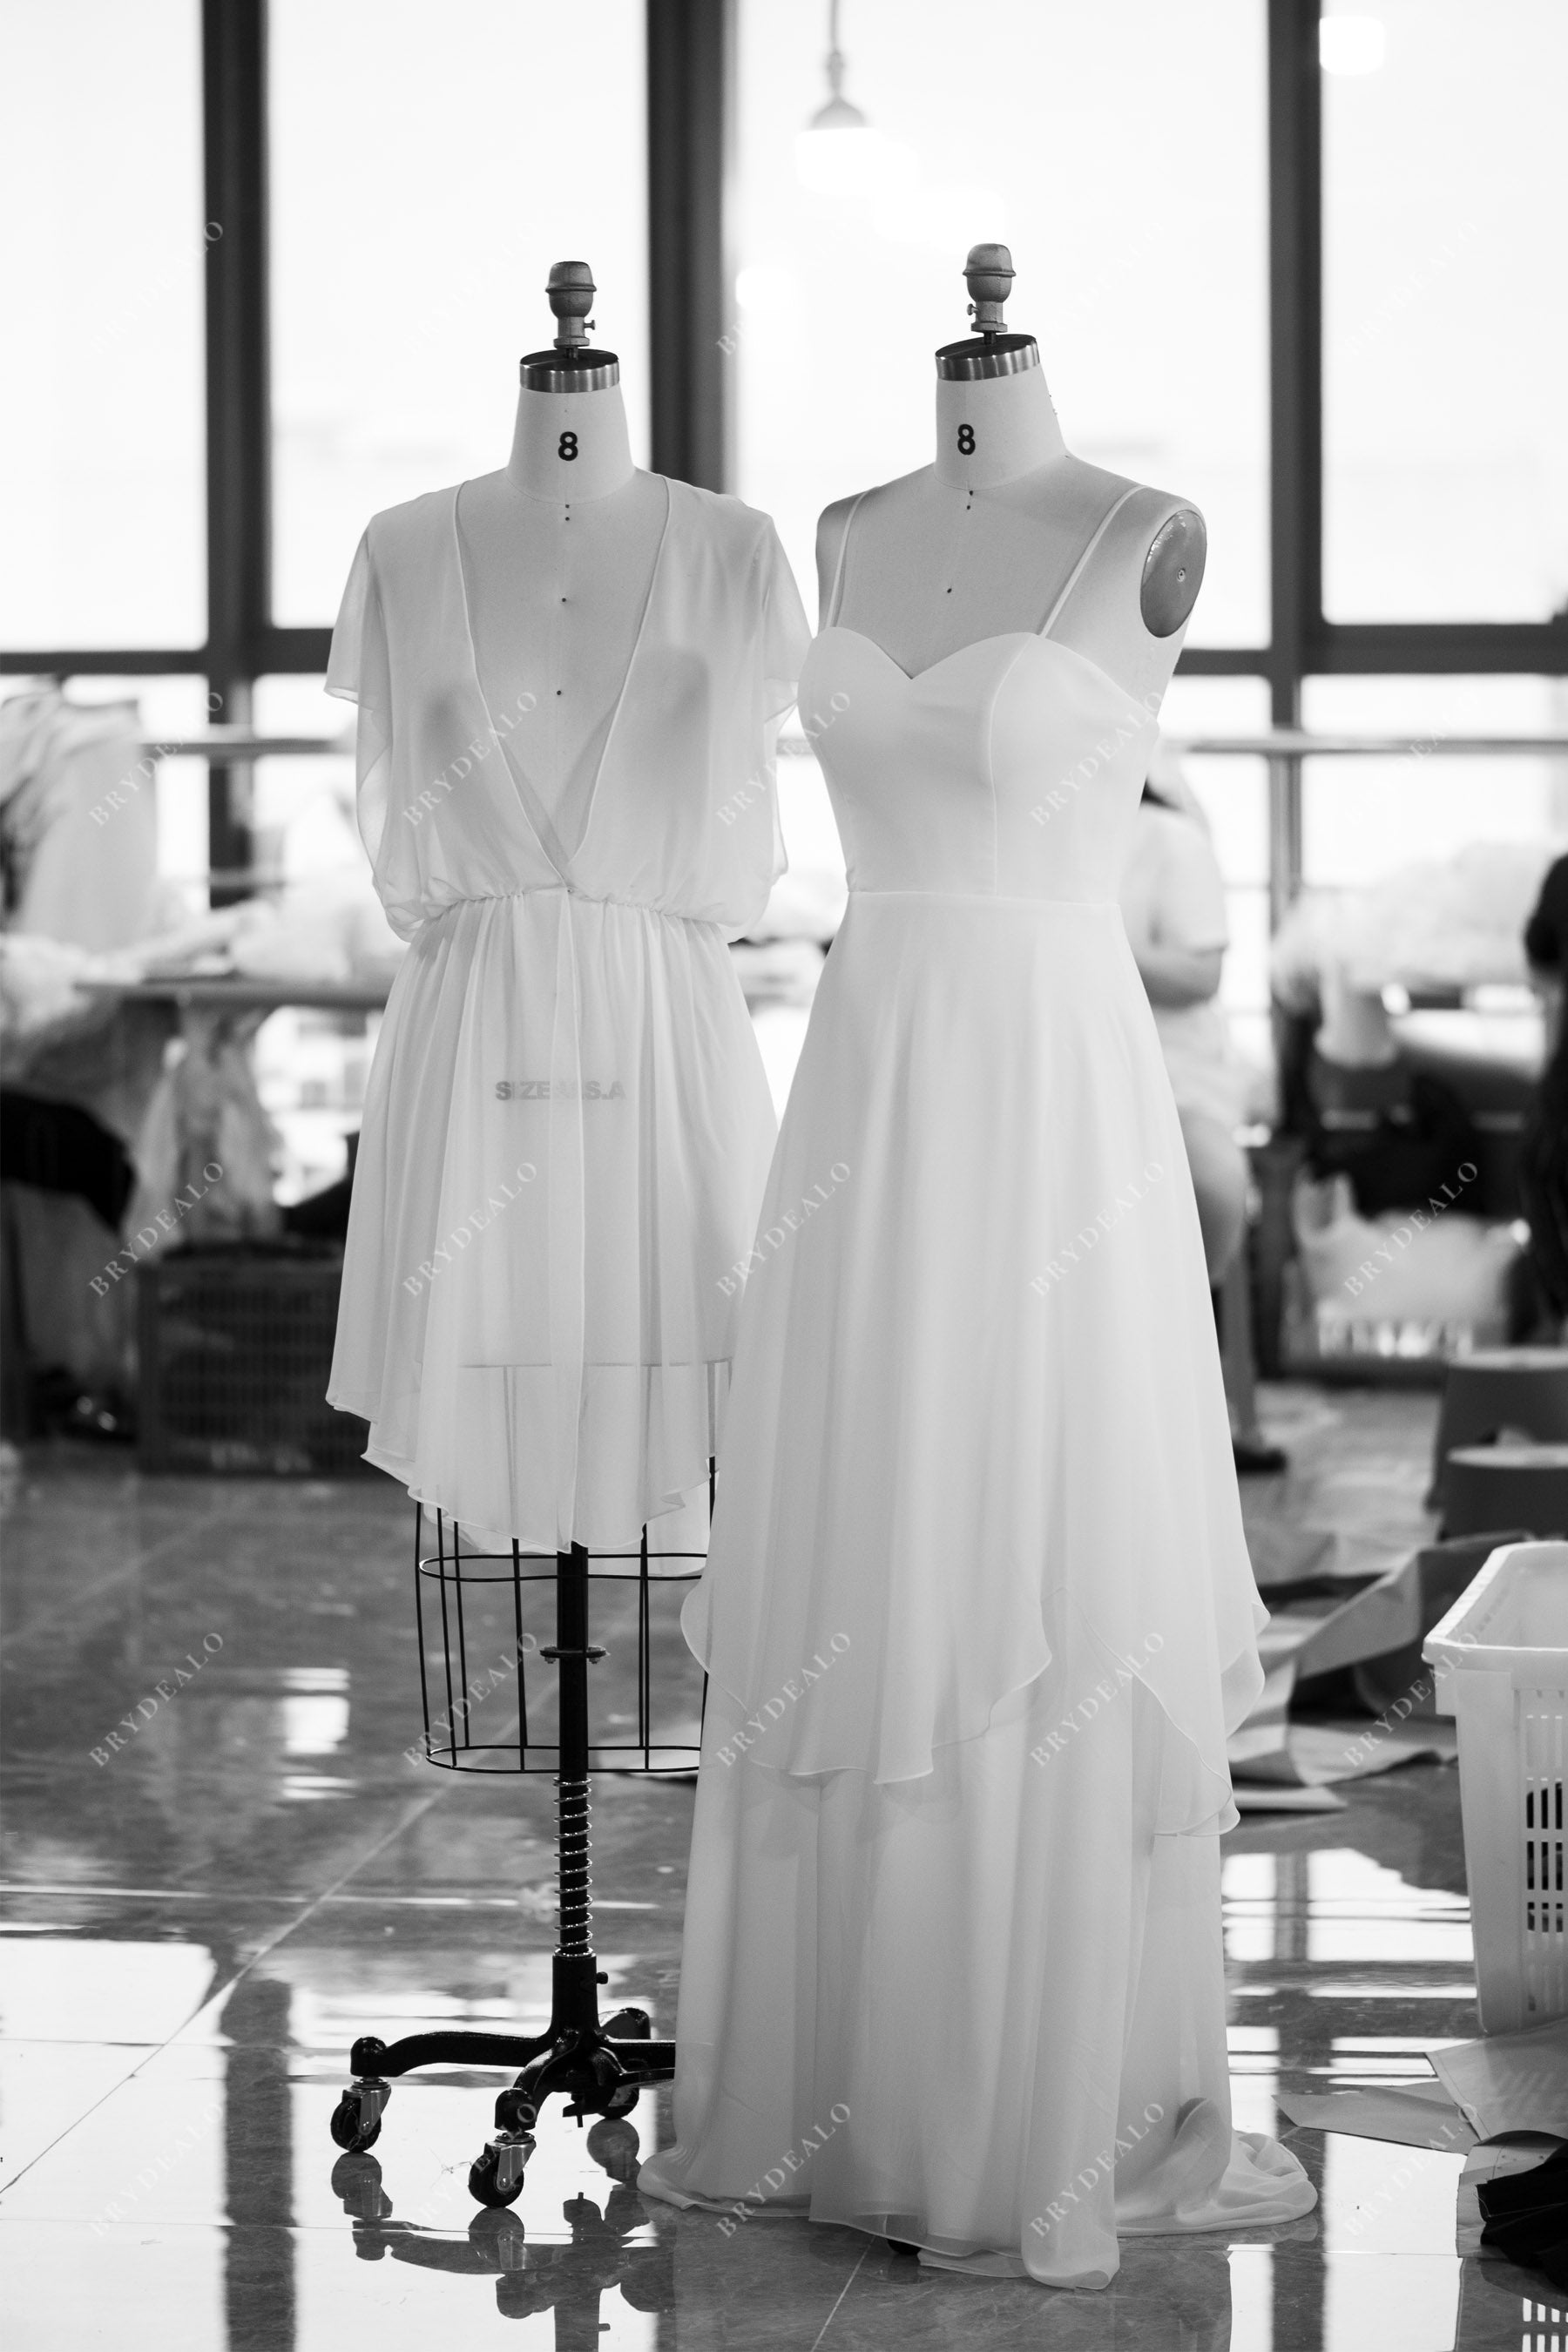 wholesale chiffon A-line wedding dress with detachable jacket